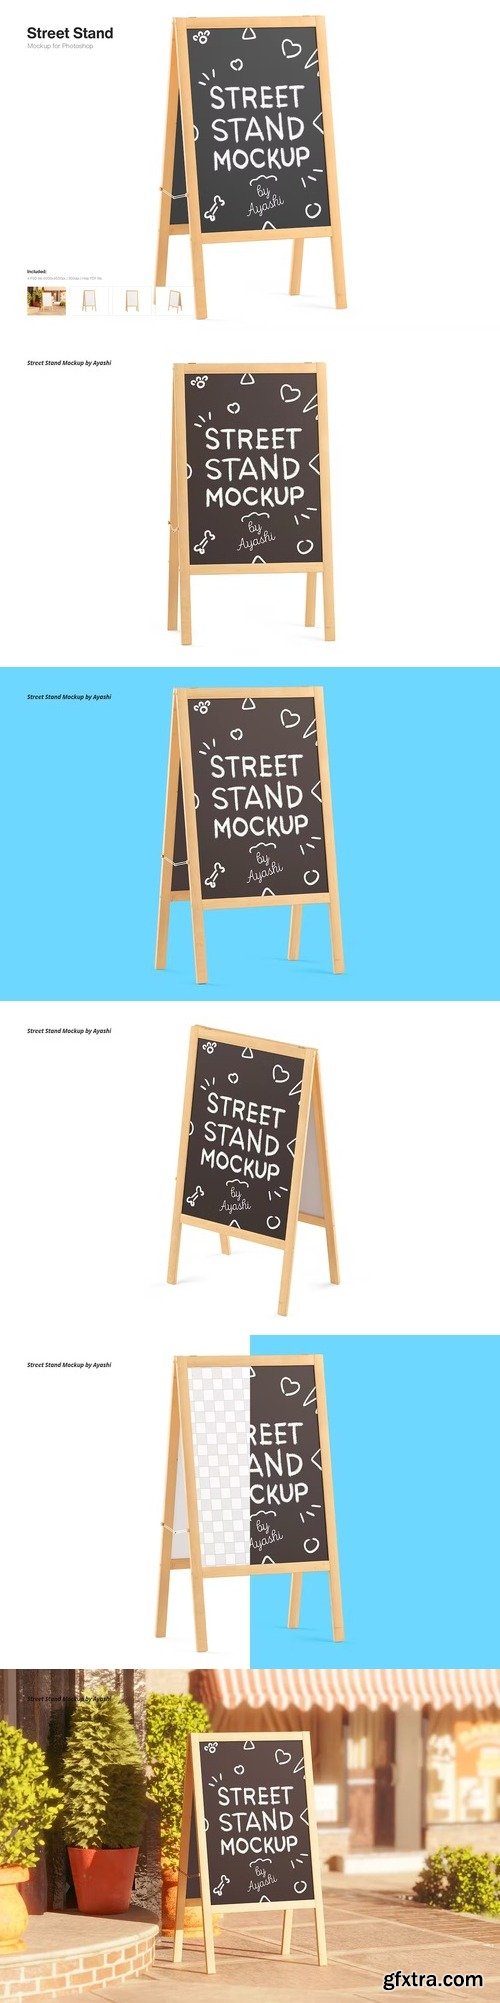 Advertising Street Stand Mockup